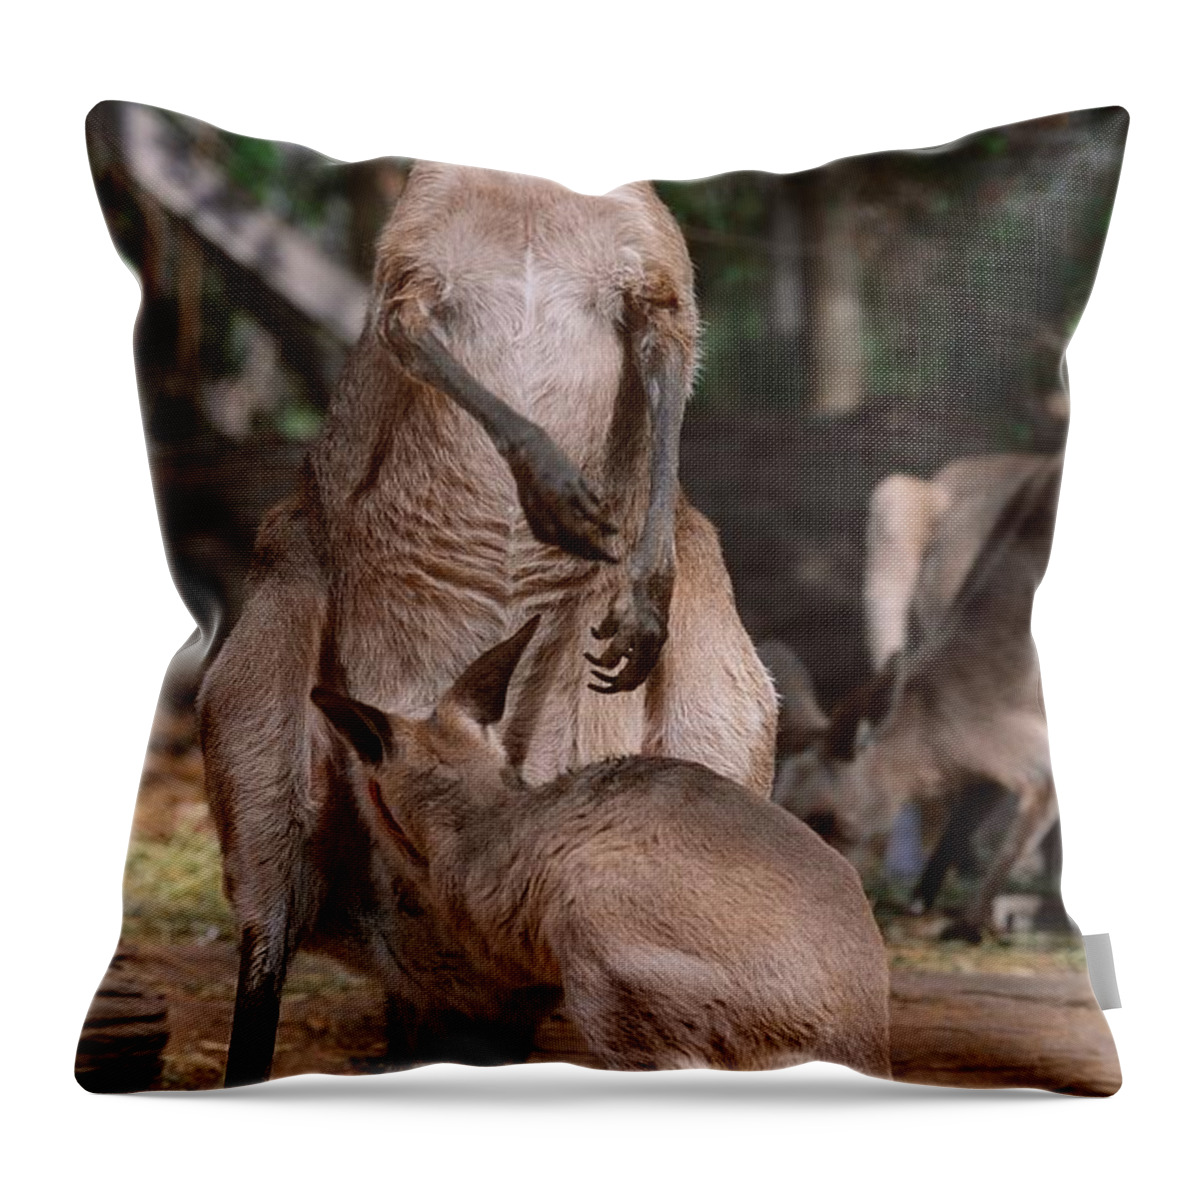 Estock Throw Pillow featuring the digital art Kangaroos, Joey Feeding From Mother by Johanna Huber